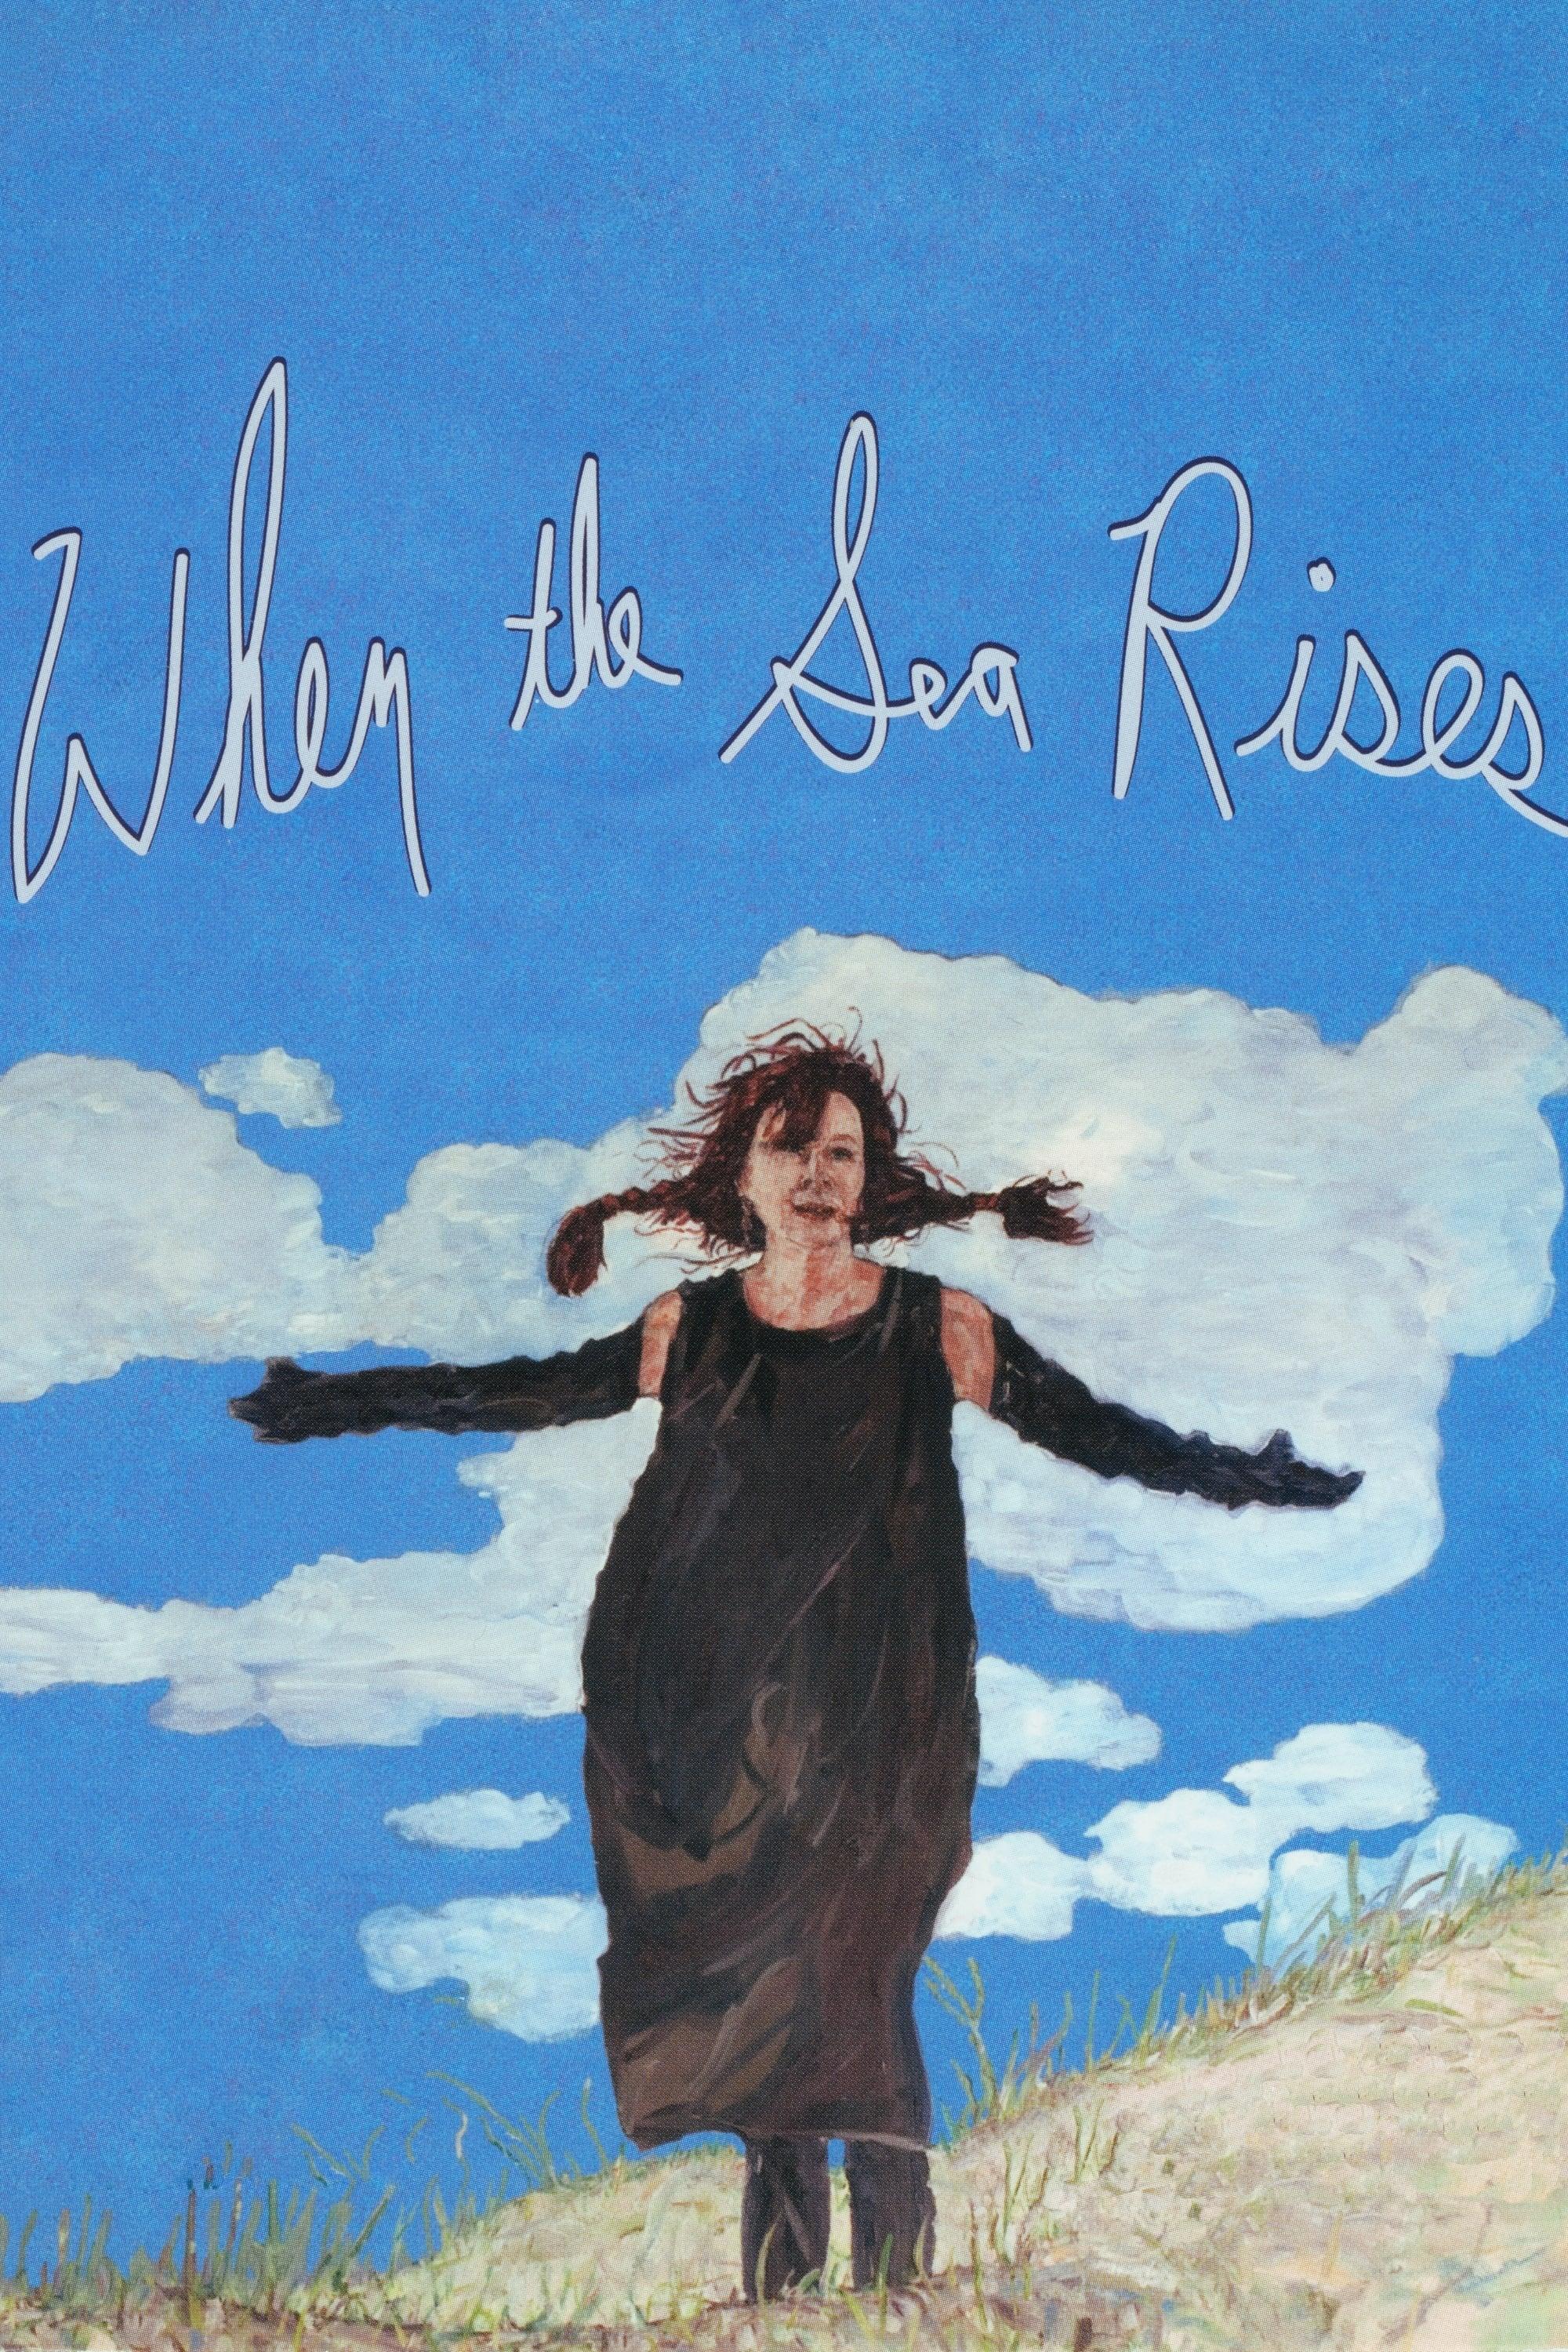 When the Sea Rises poster